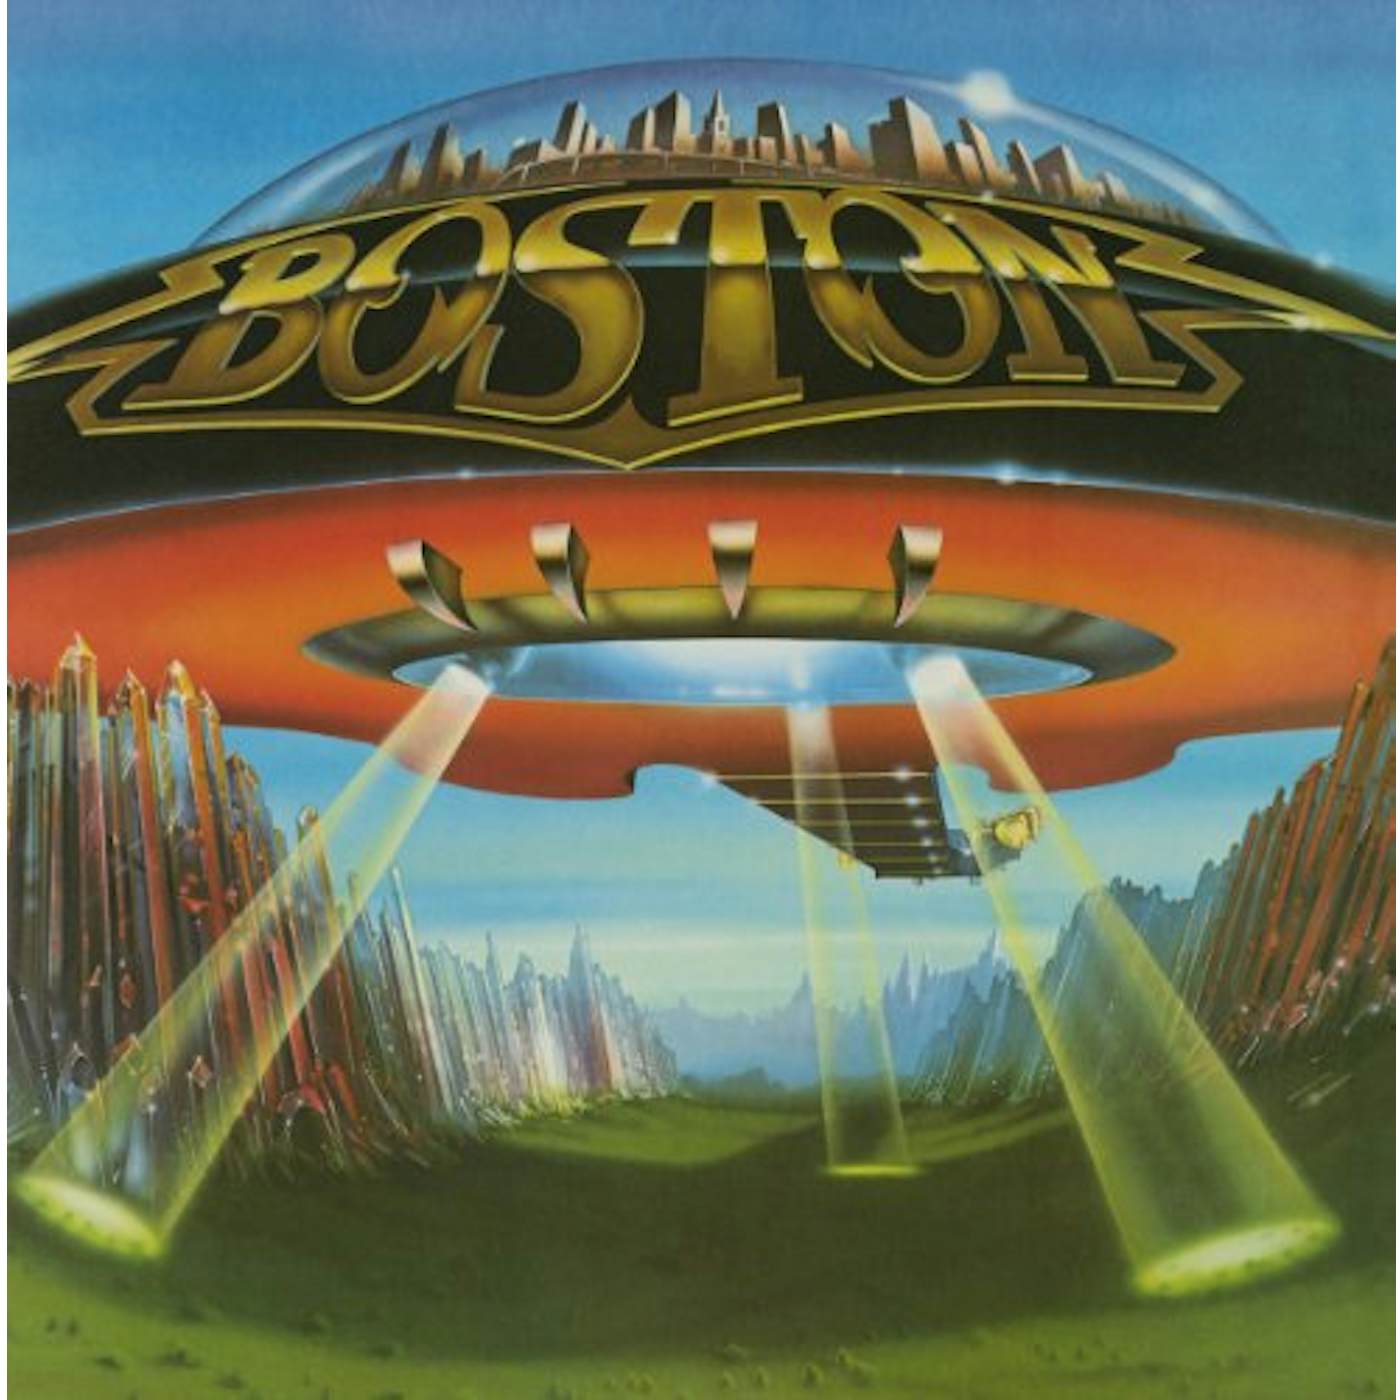 Boston Don't Look Back Vinyl Record